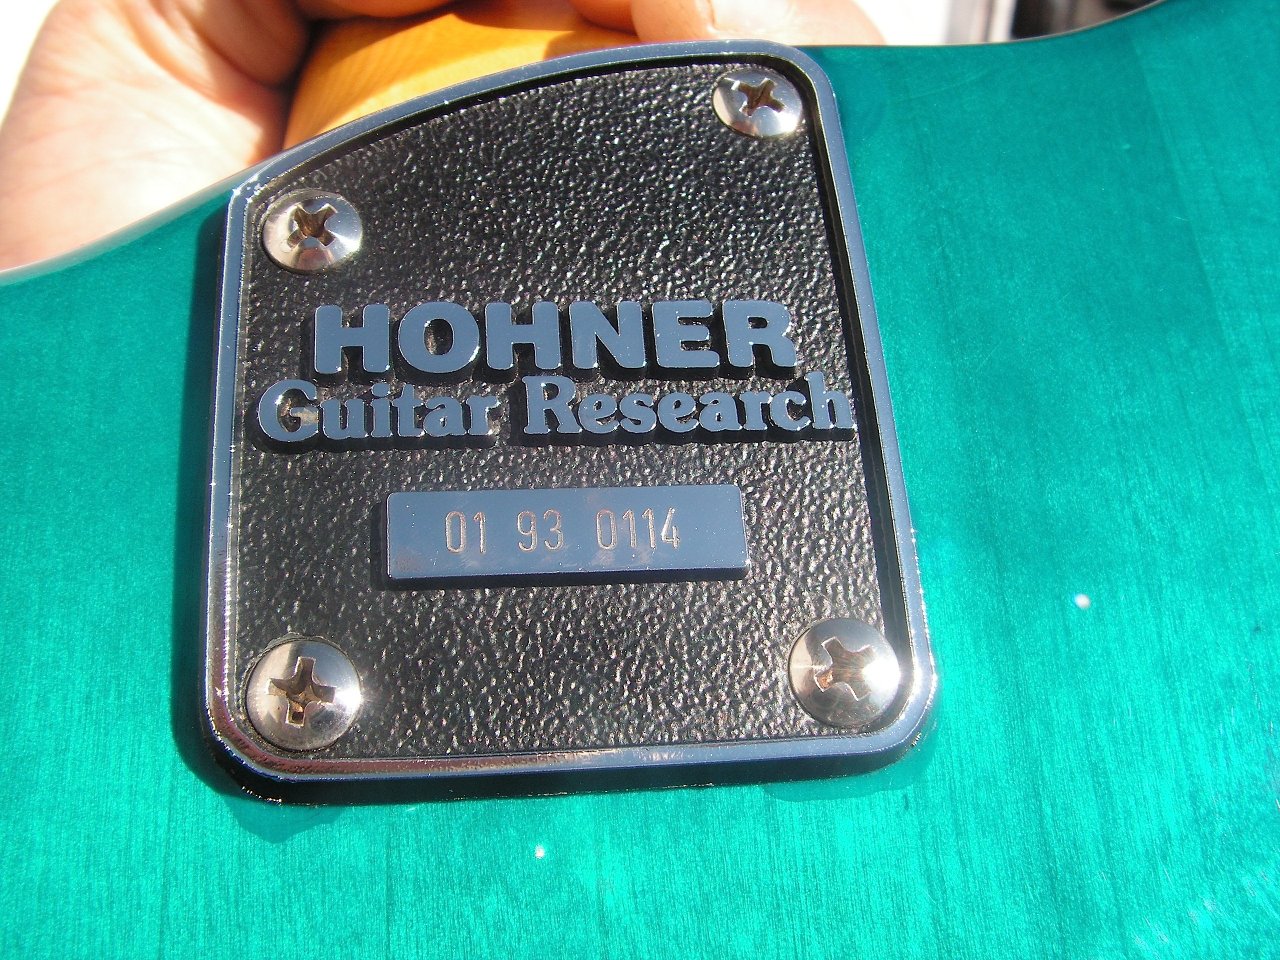 Hohner Revelation ATX 01 93 0114 serial 1.jpg